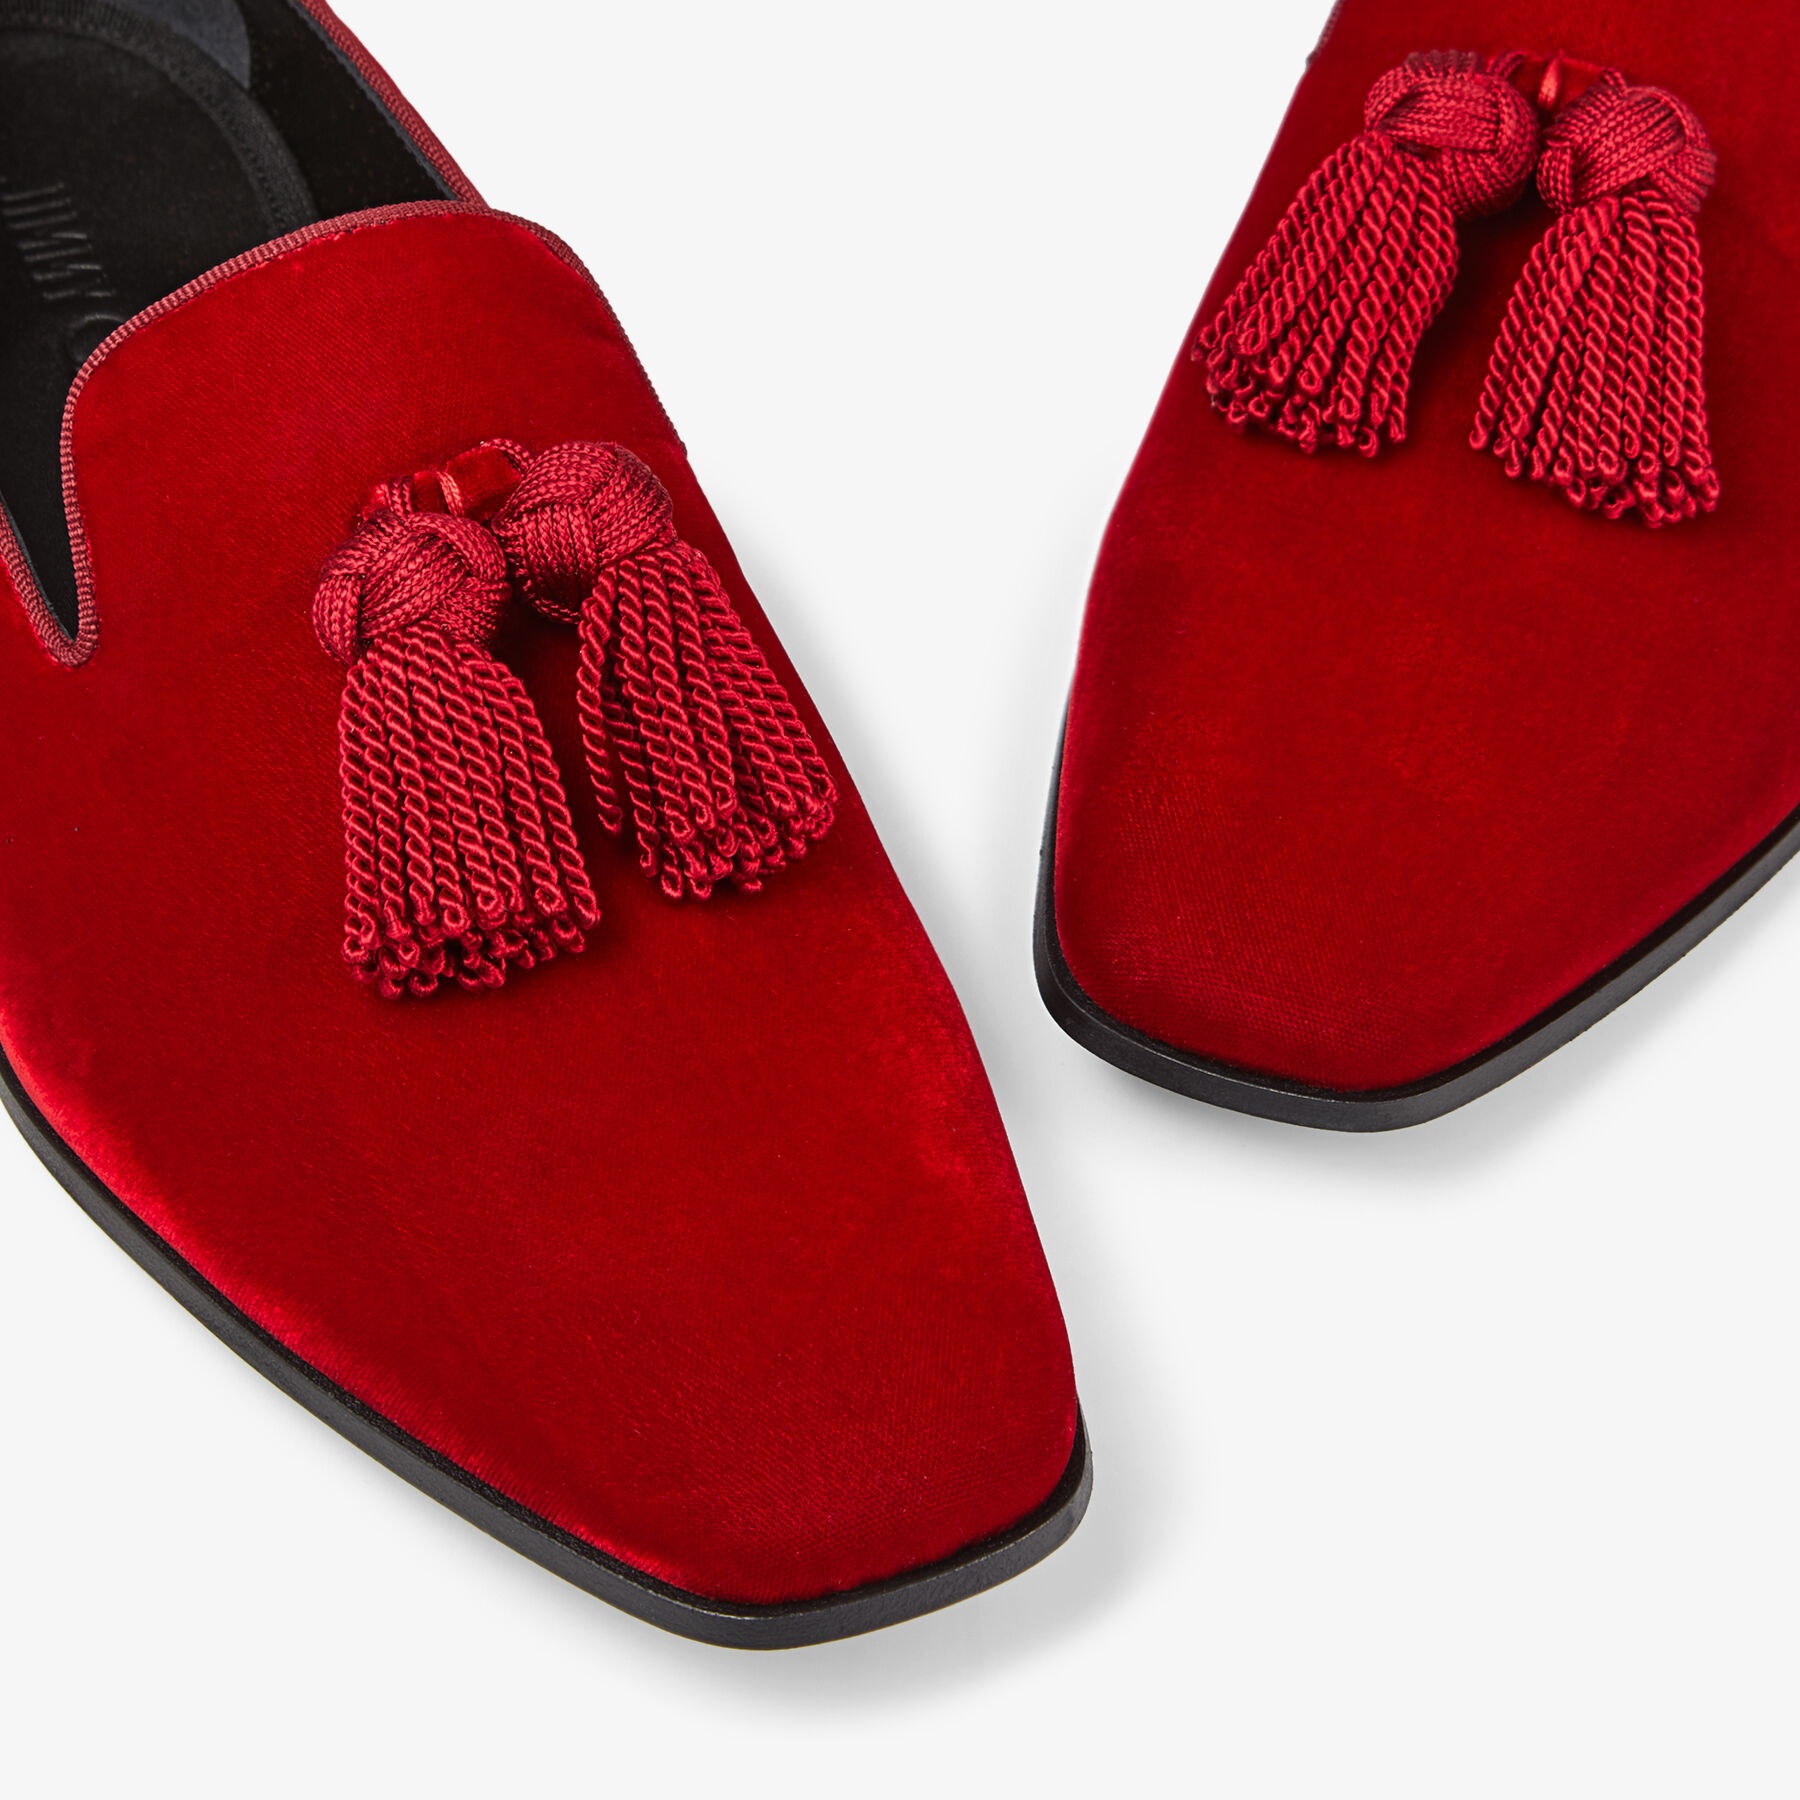 Foxley/M
Red Velvet Slip-On Shoes with Tassel - 3